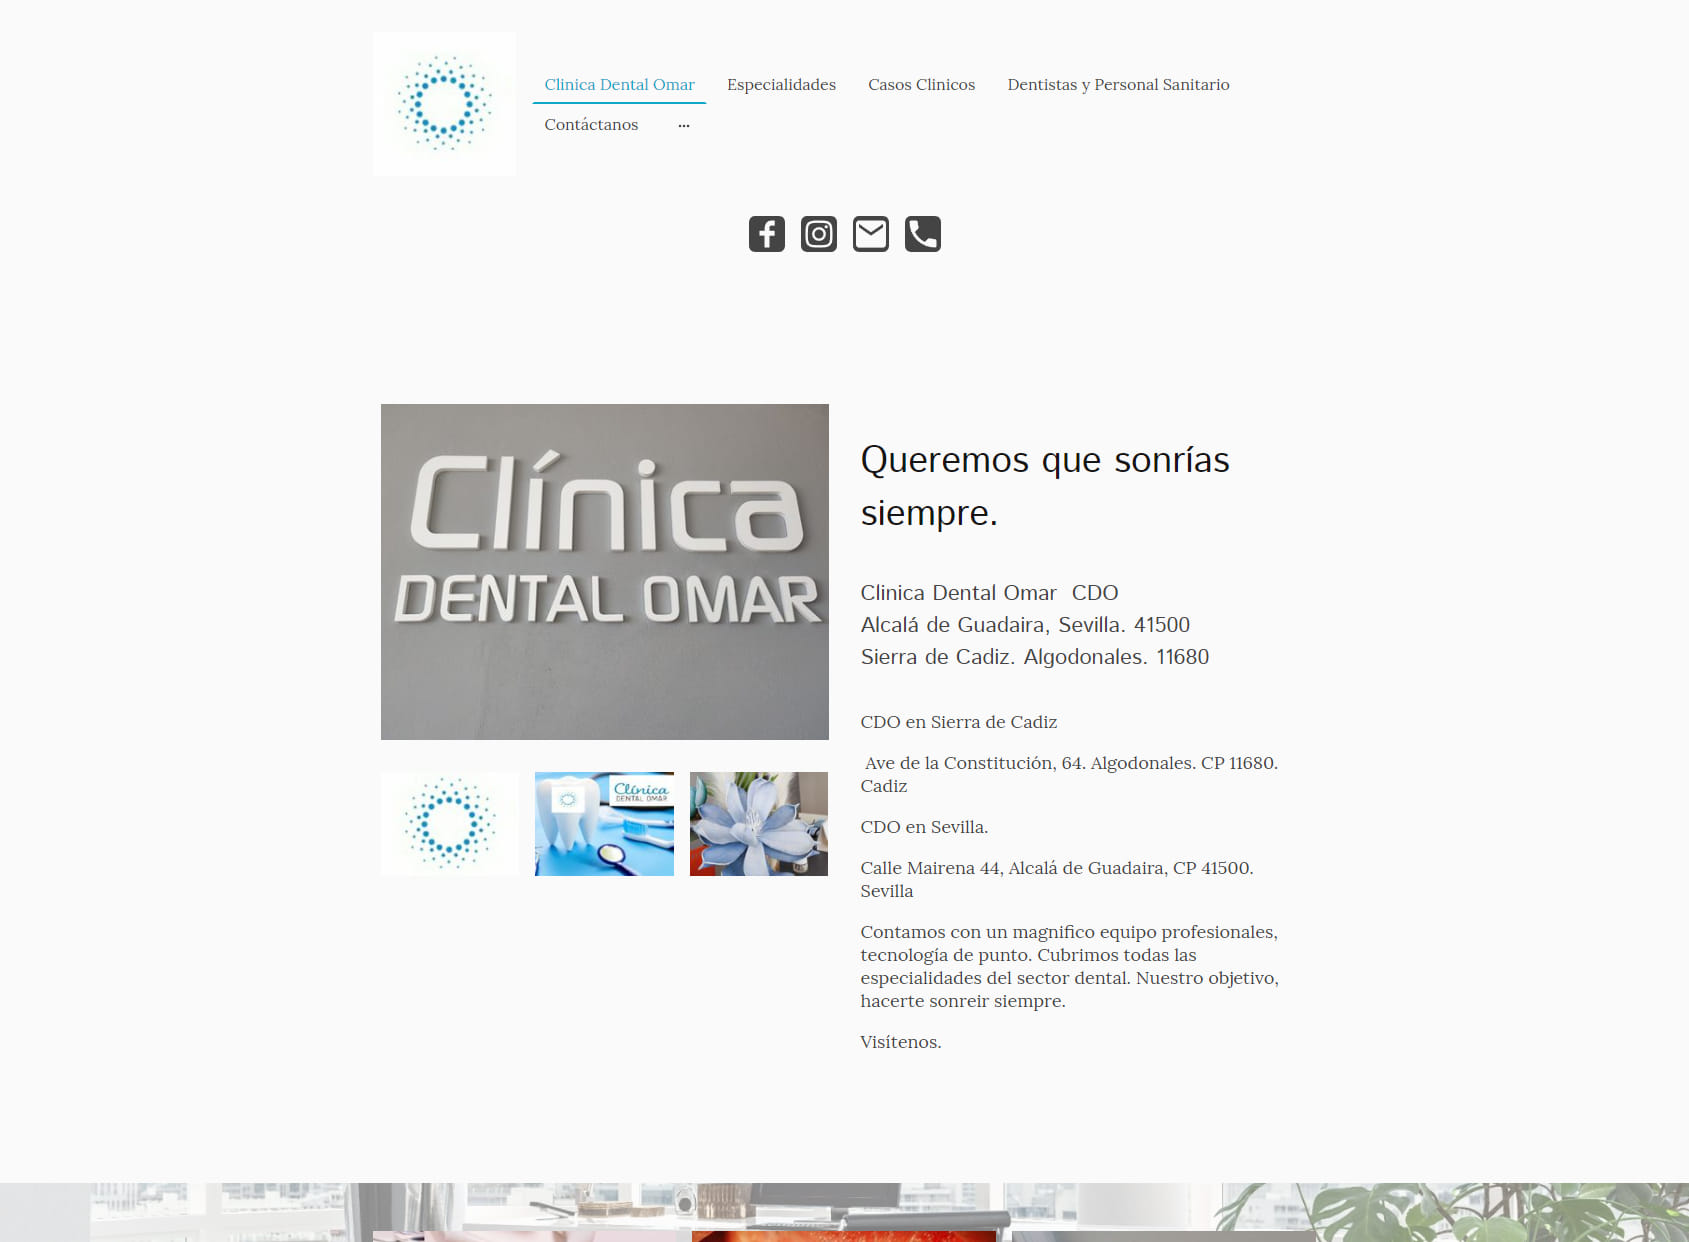 Clinica Dental Omar